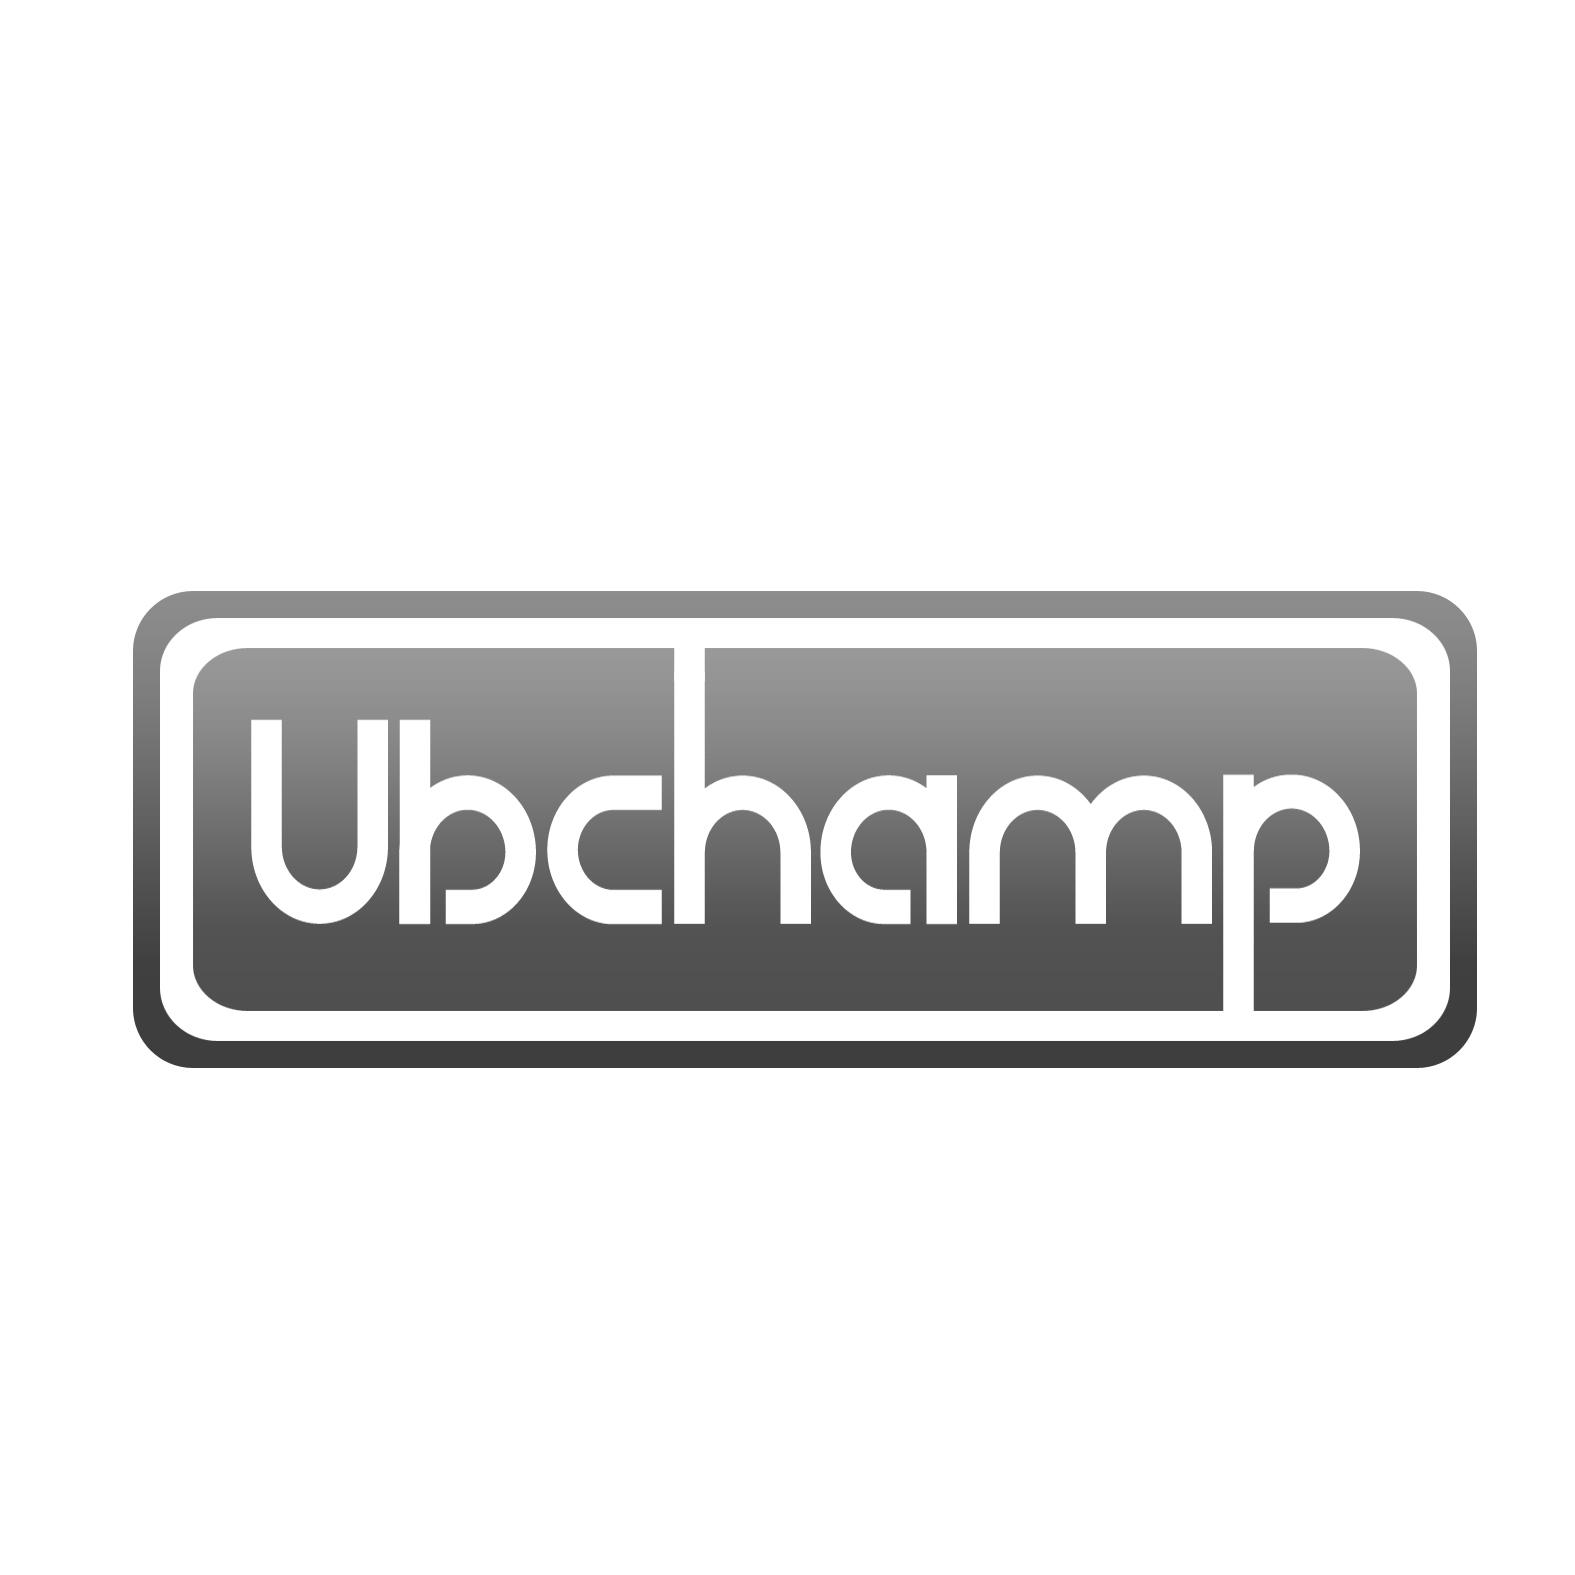 10类-医疗器械UBCHAMP商标转让